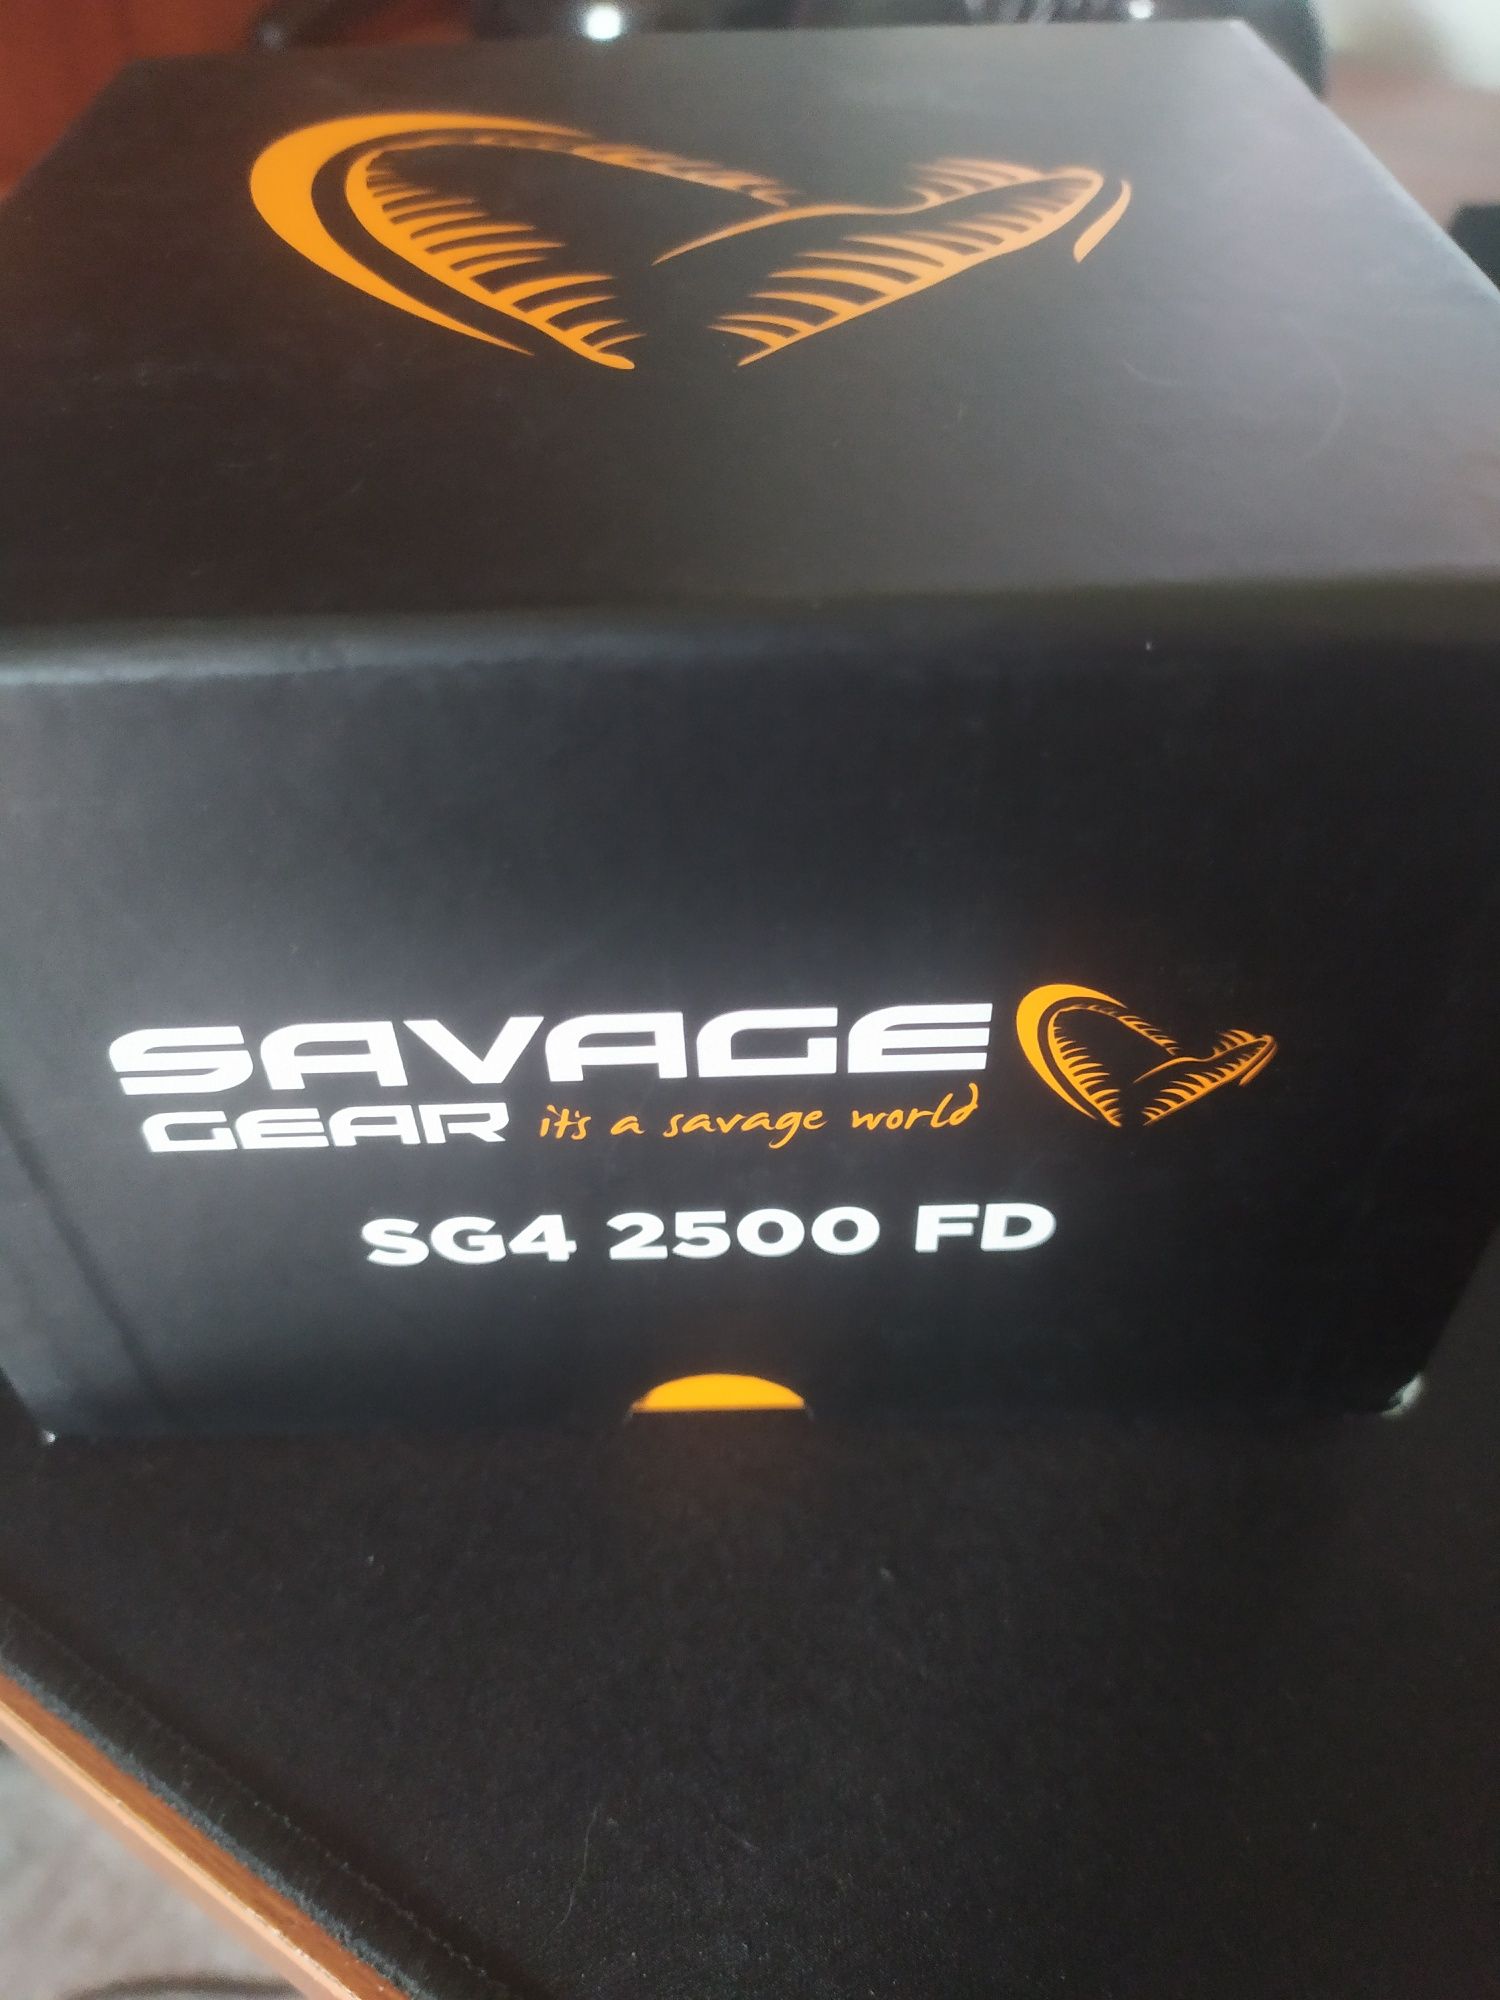 Kołowrotek savage gear SG4 2500 FD